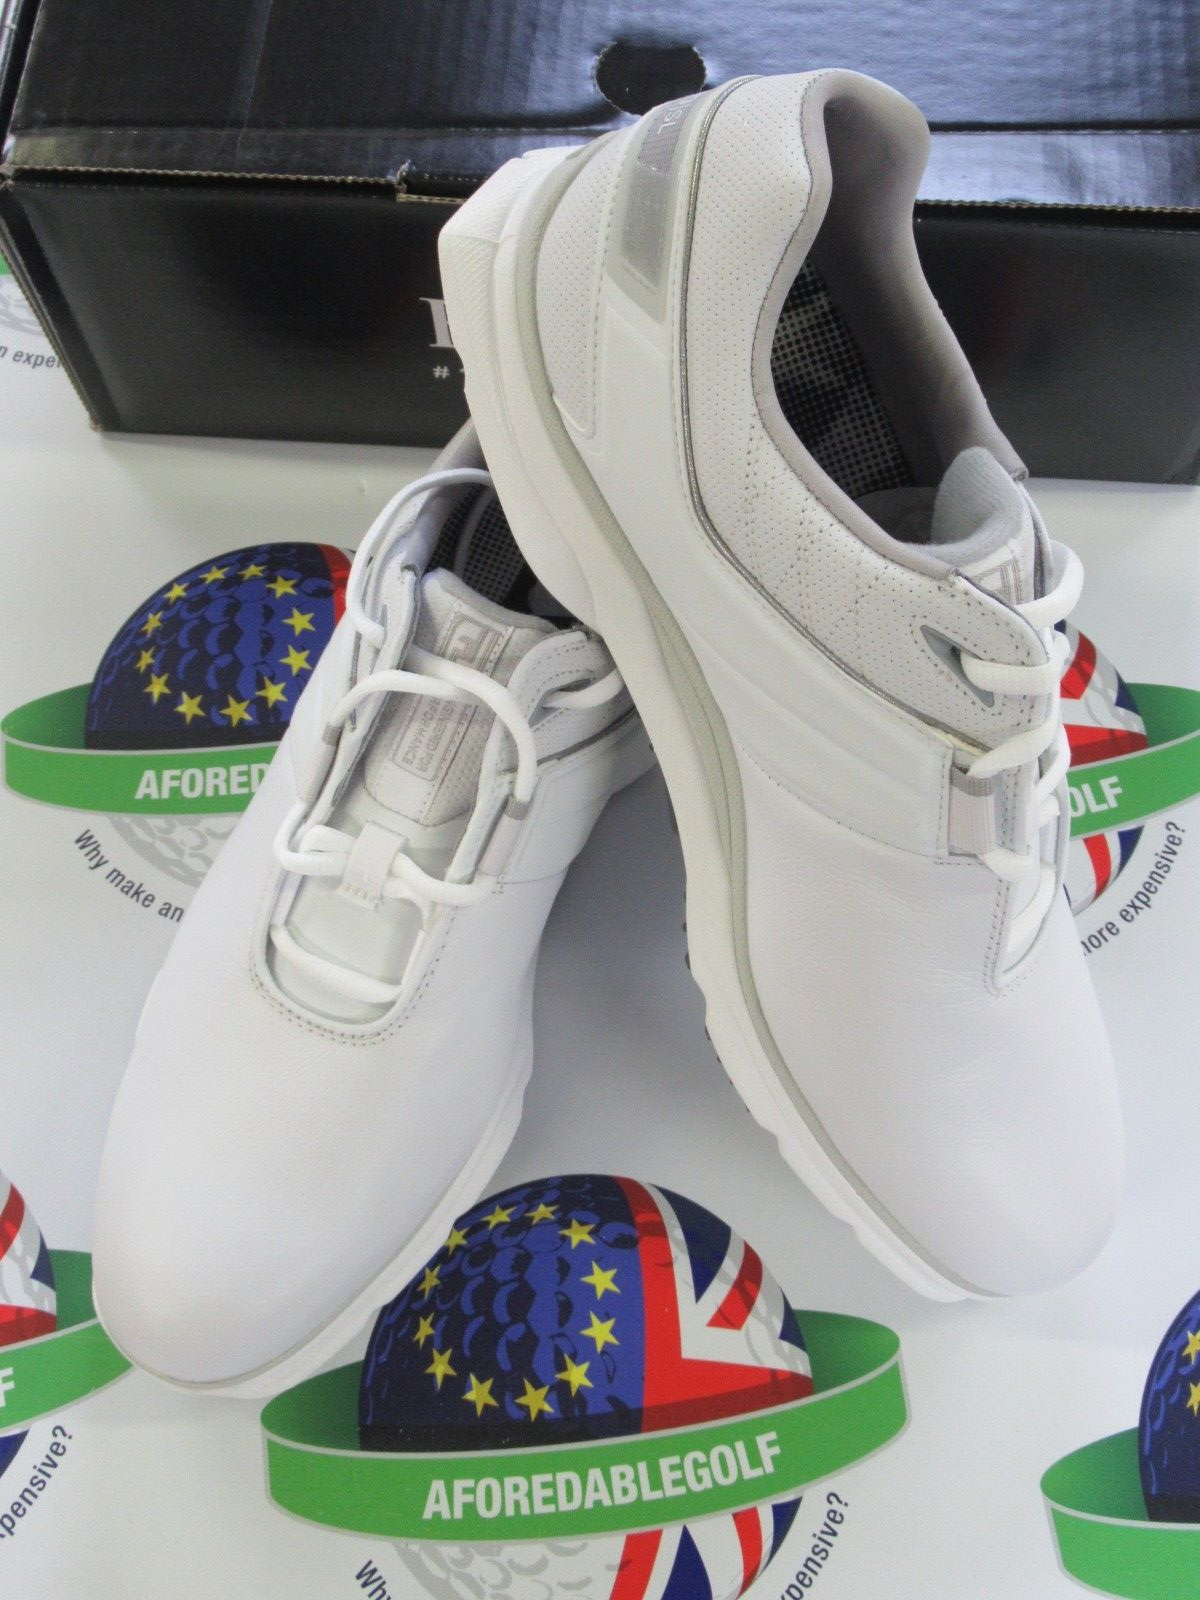 footjoy pro sl waterproof golf shoes 53070k white/silver uk size 10.5 medium